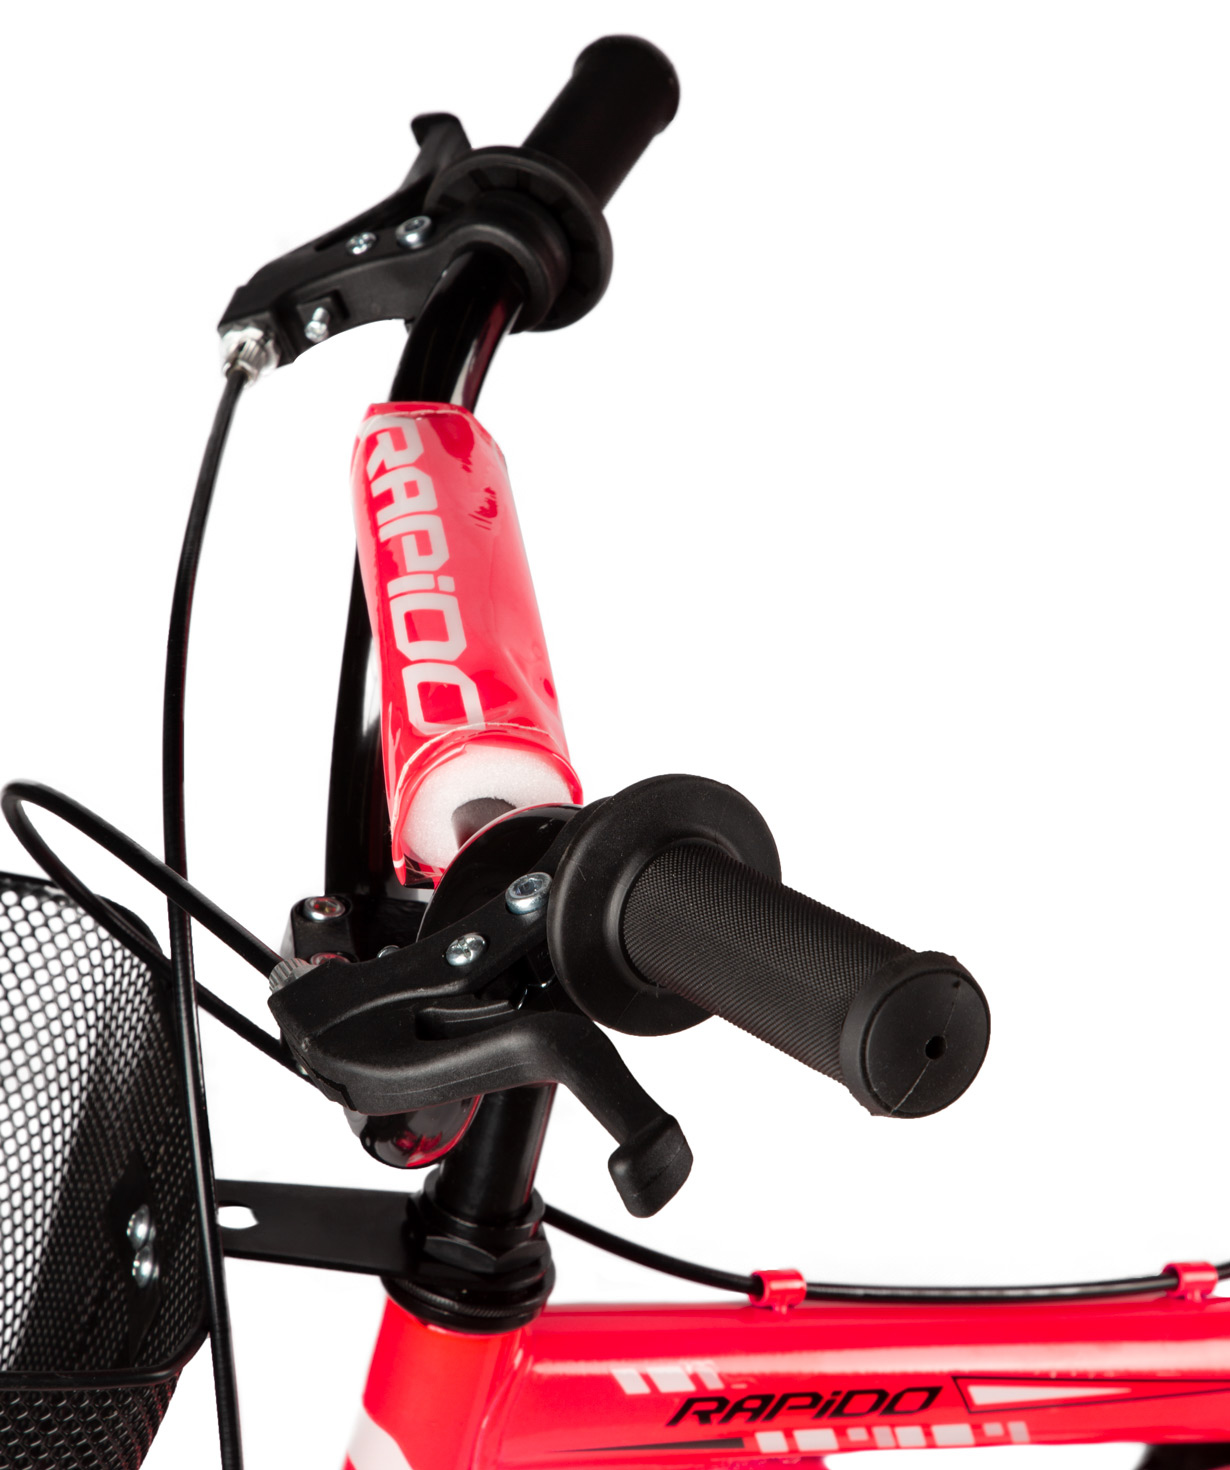 Հեծանիվ «Rapido» 12-3R01